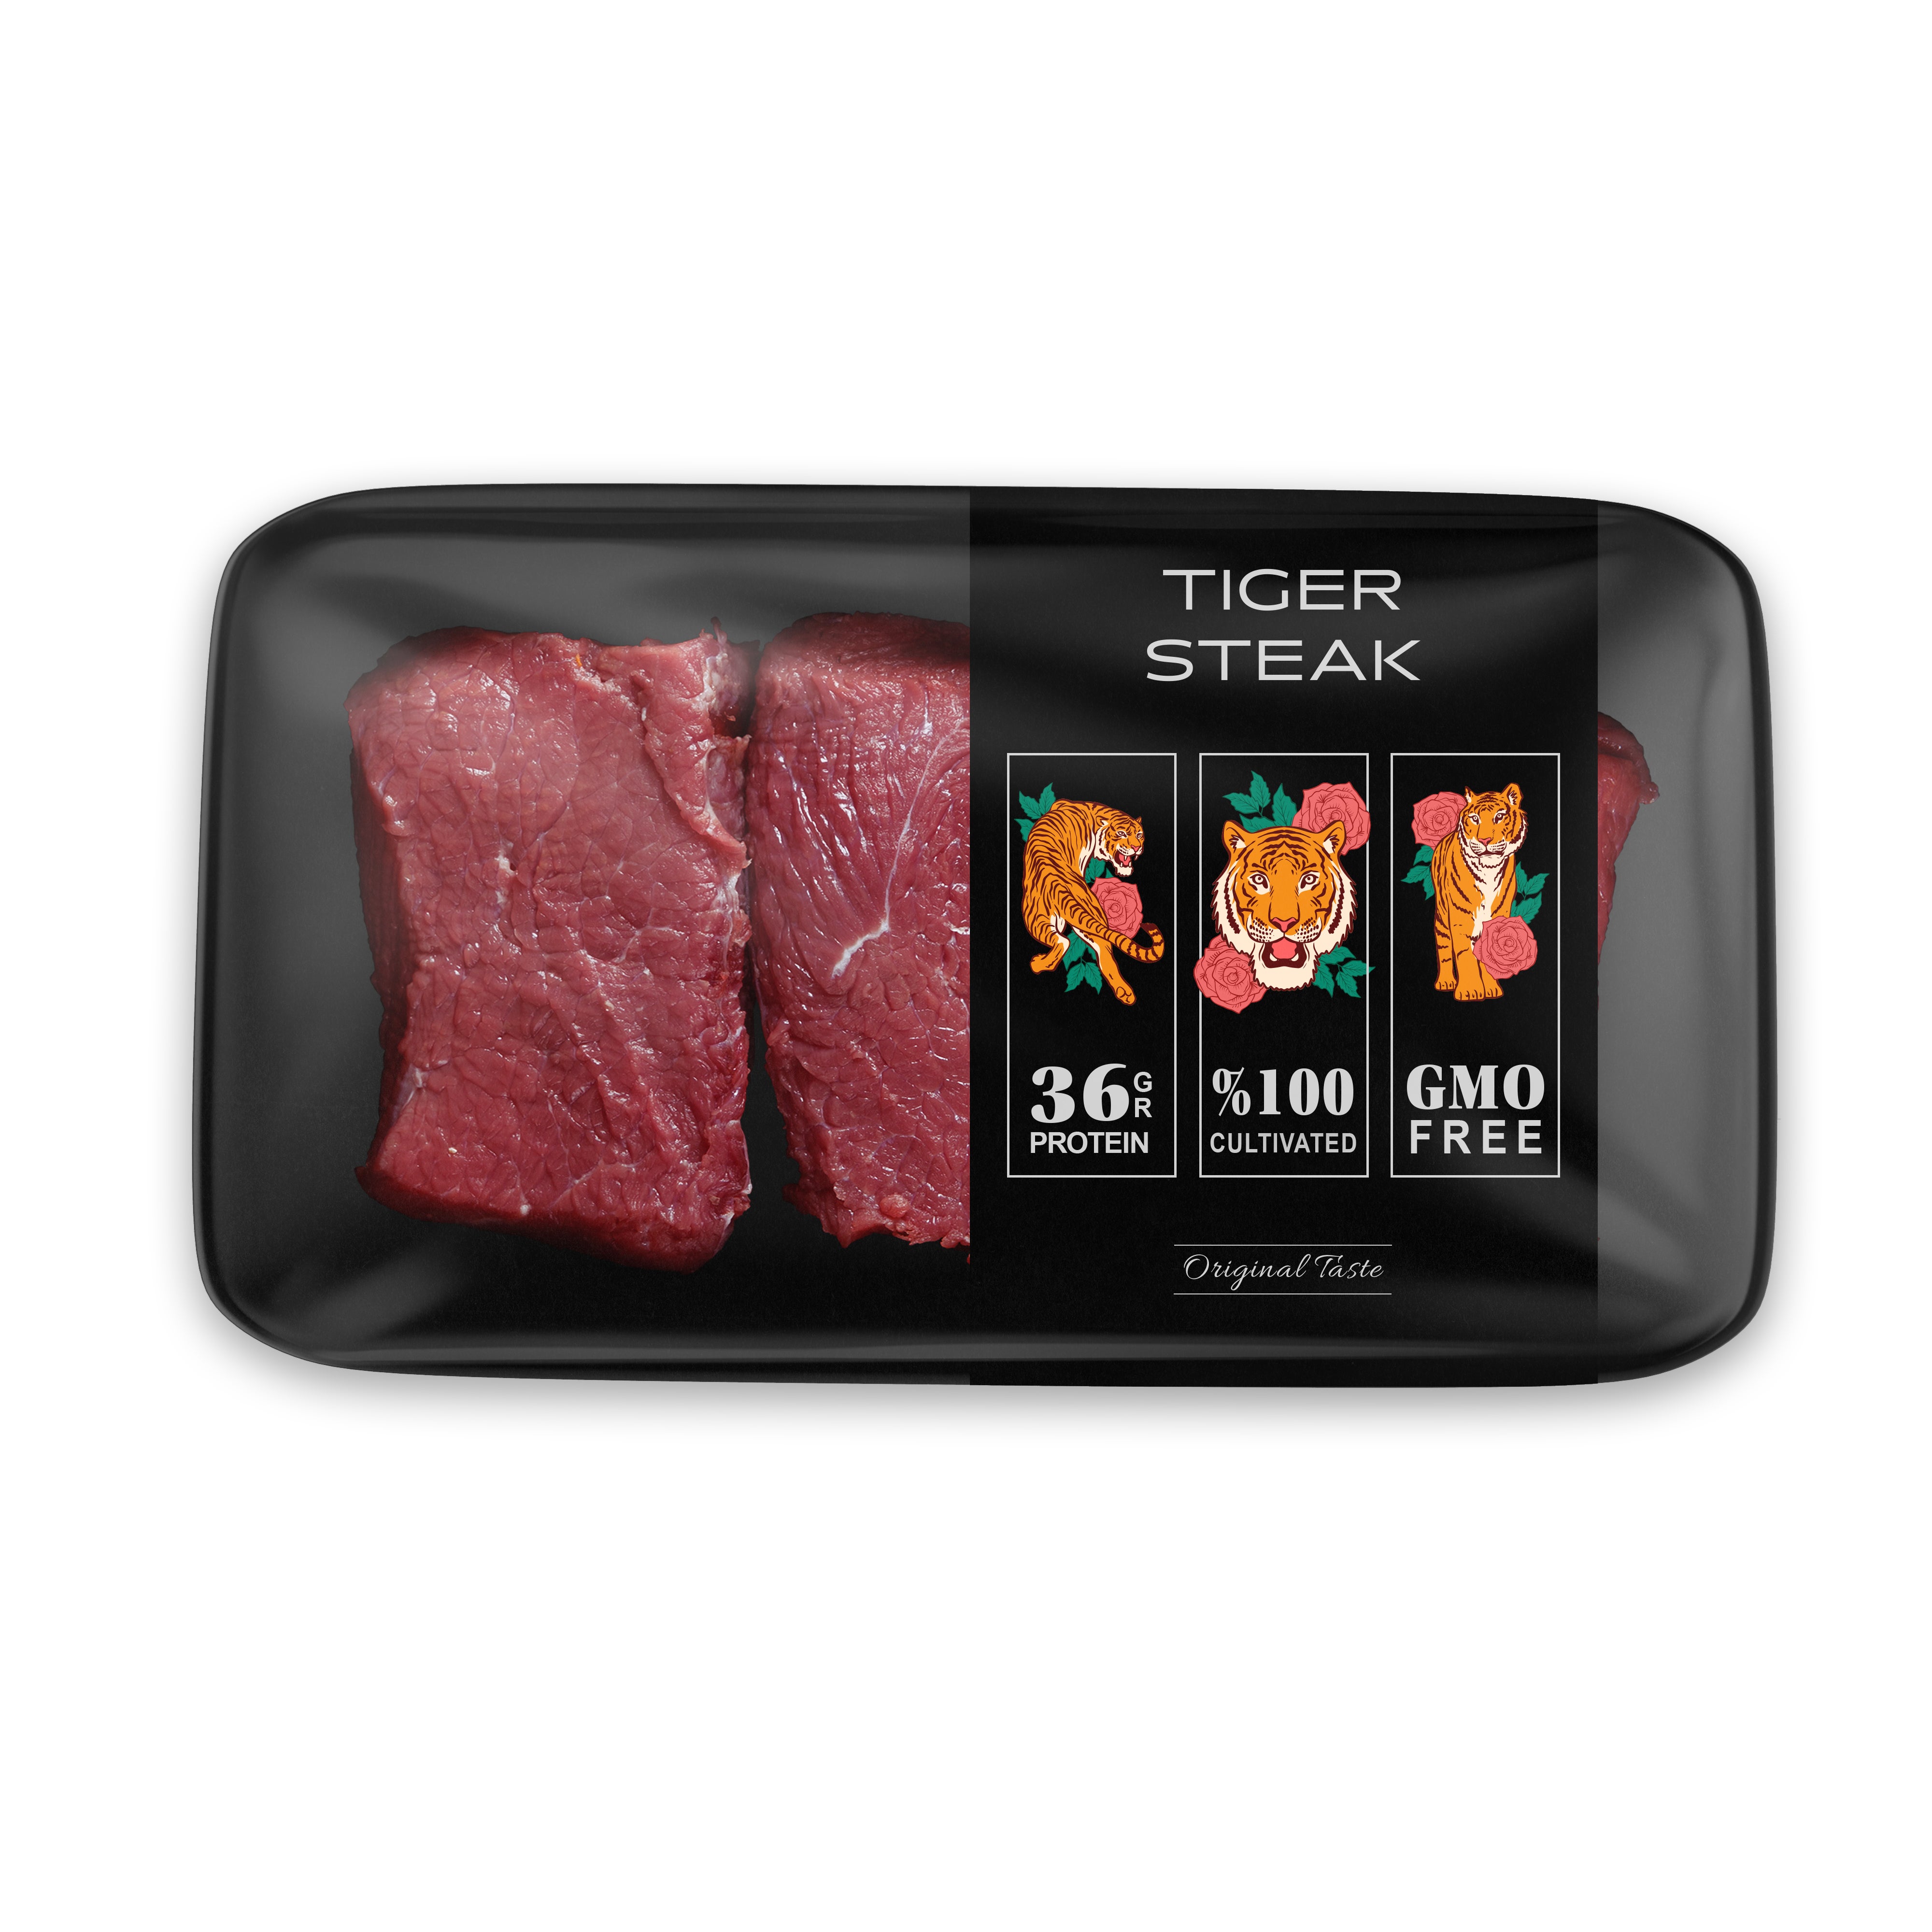 A ‘Tiger Steak' sample